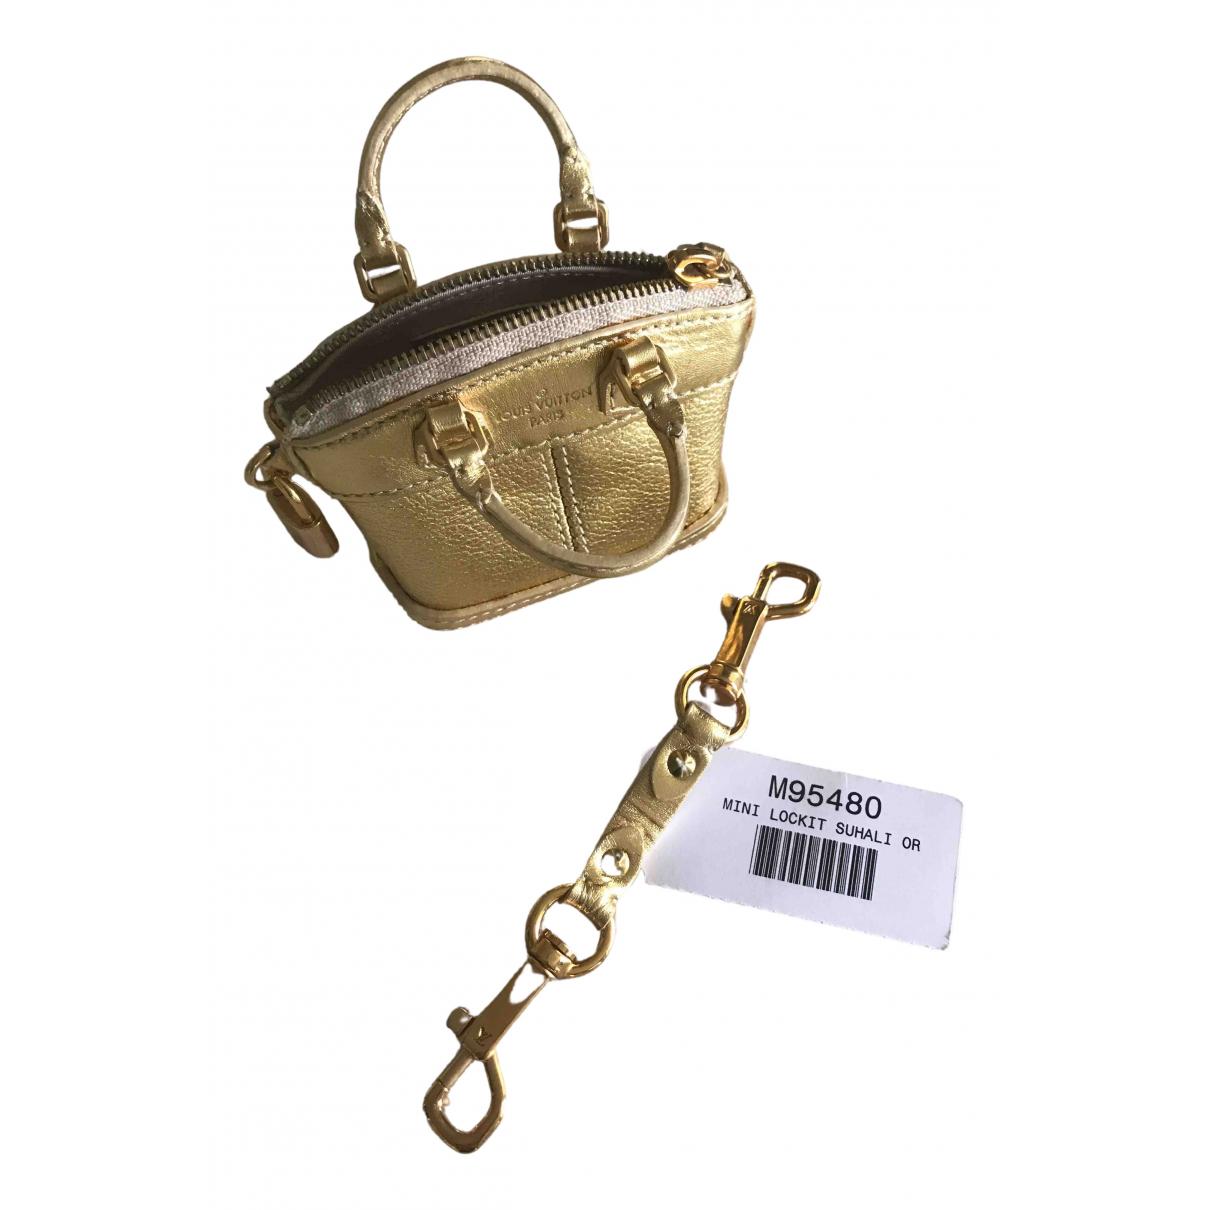 Louis Vuitton Silver Metallic Lockit Mini Handbag Keychain Bag